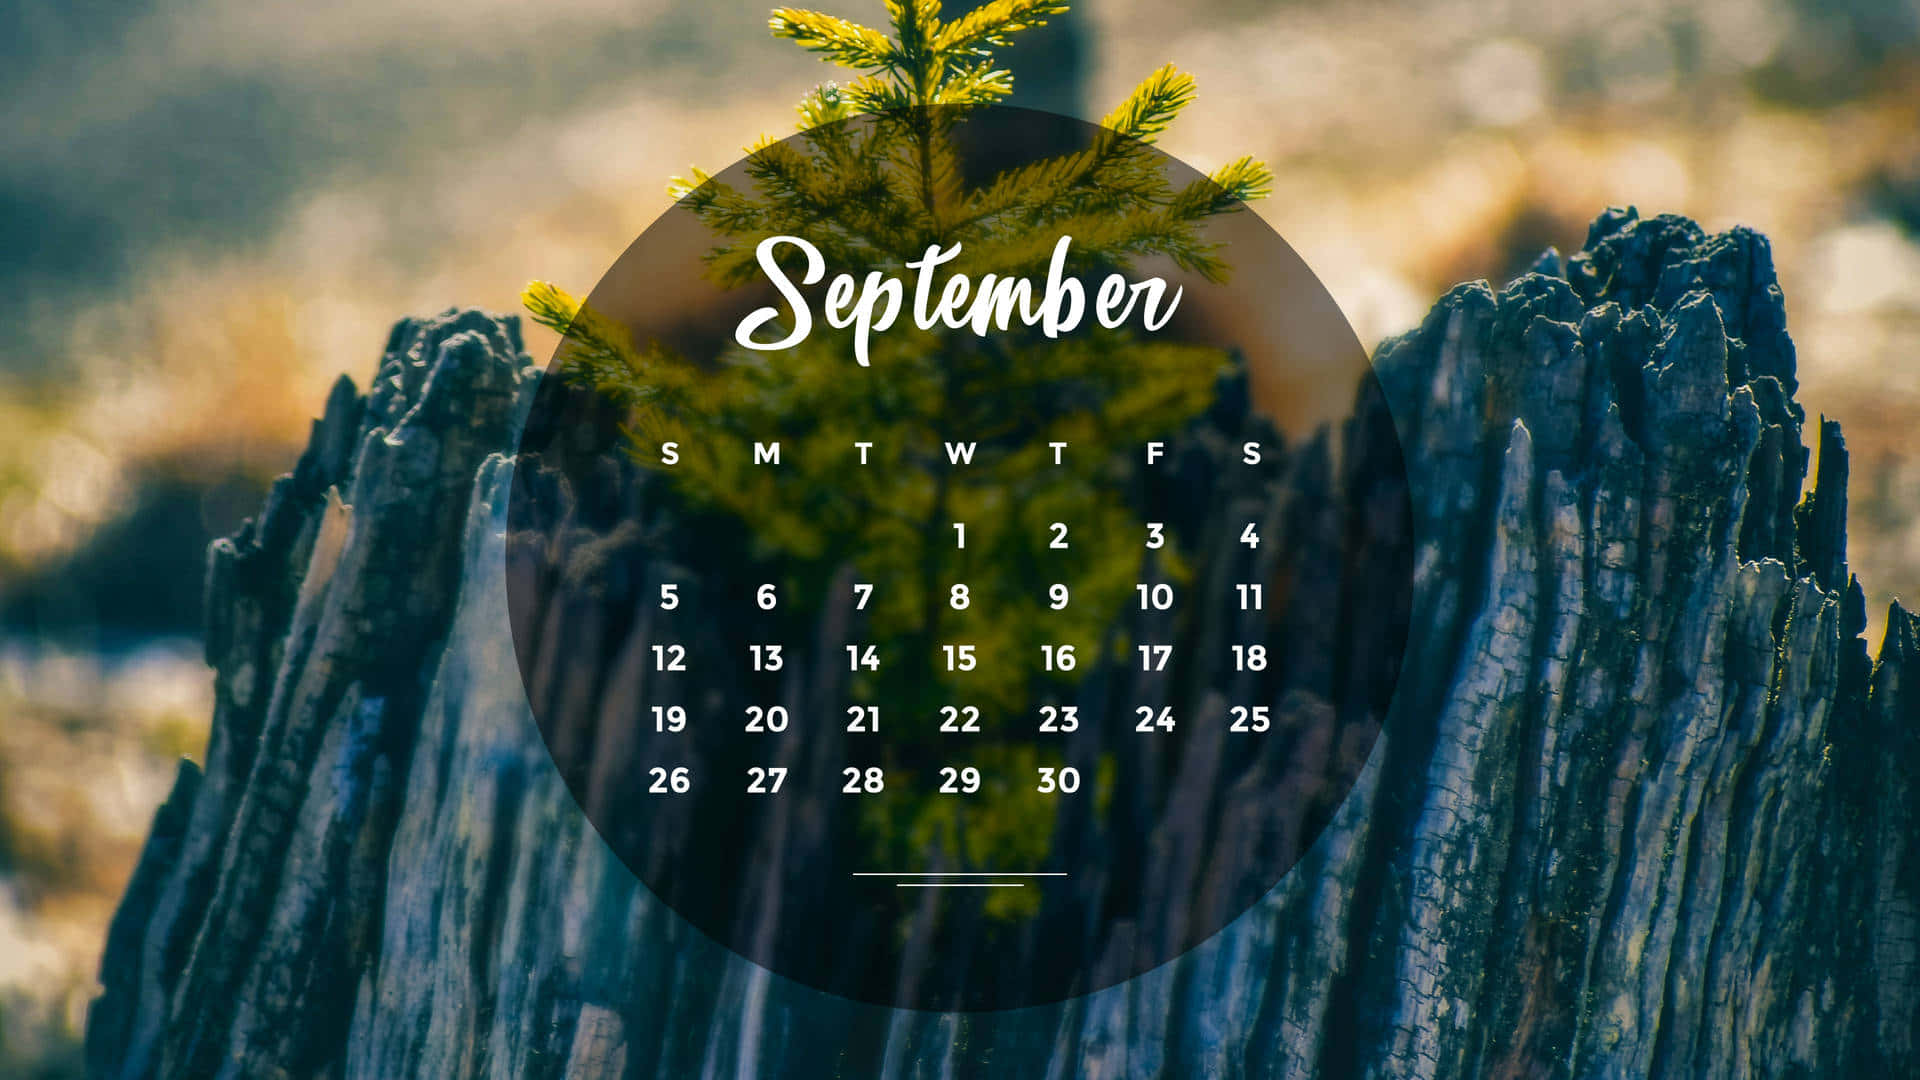 Enjoy the last beautiful days of September!